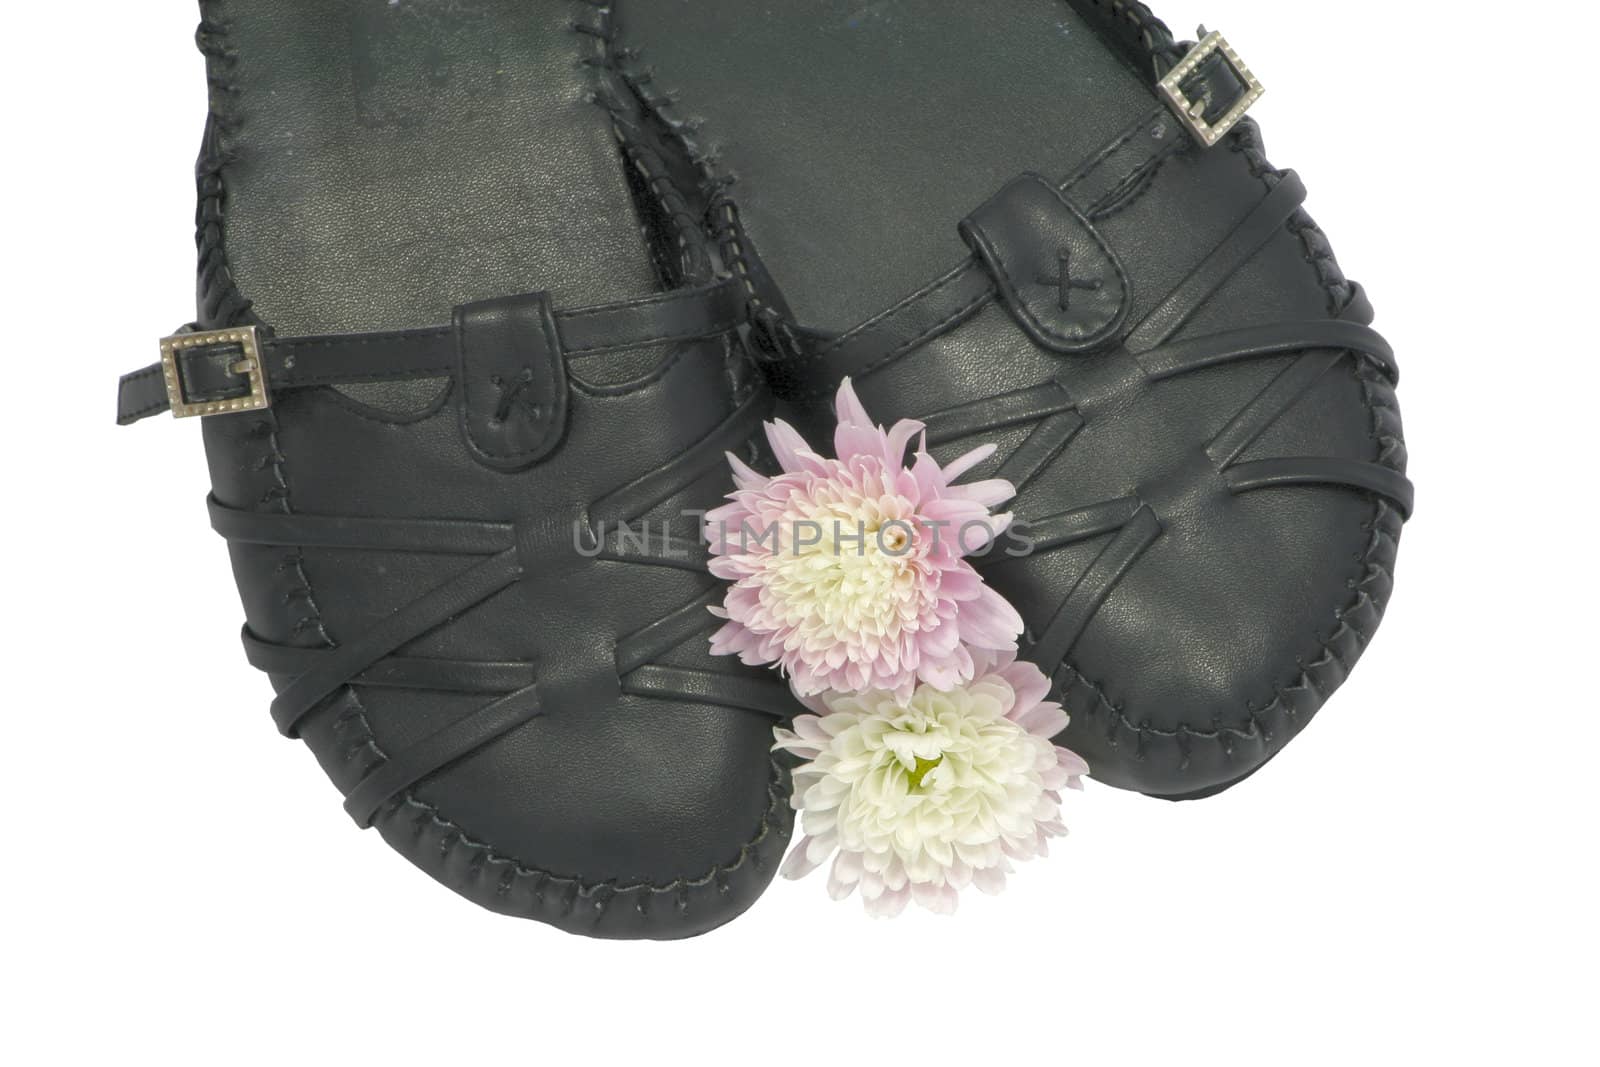 black slipon shoes by leafy